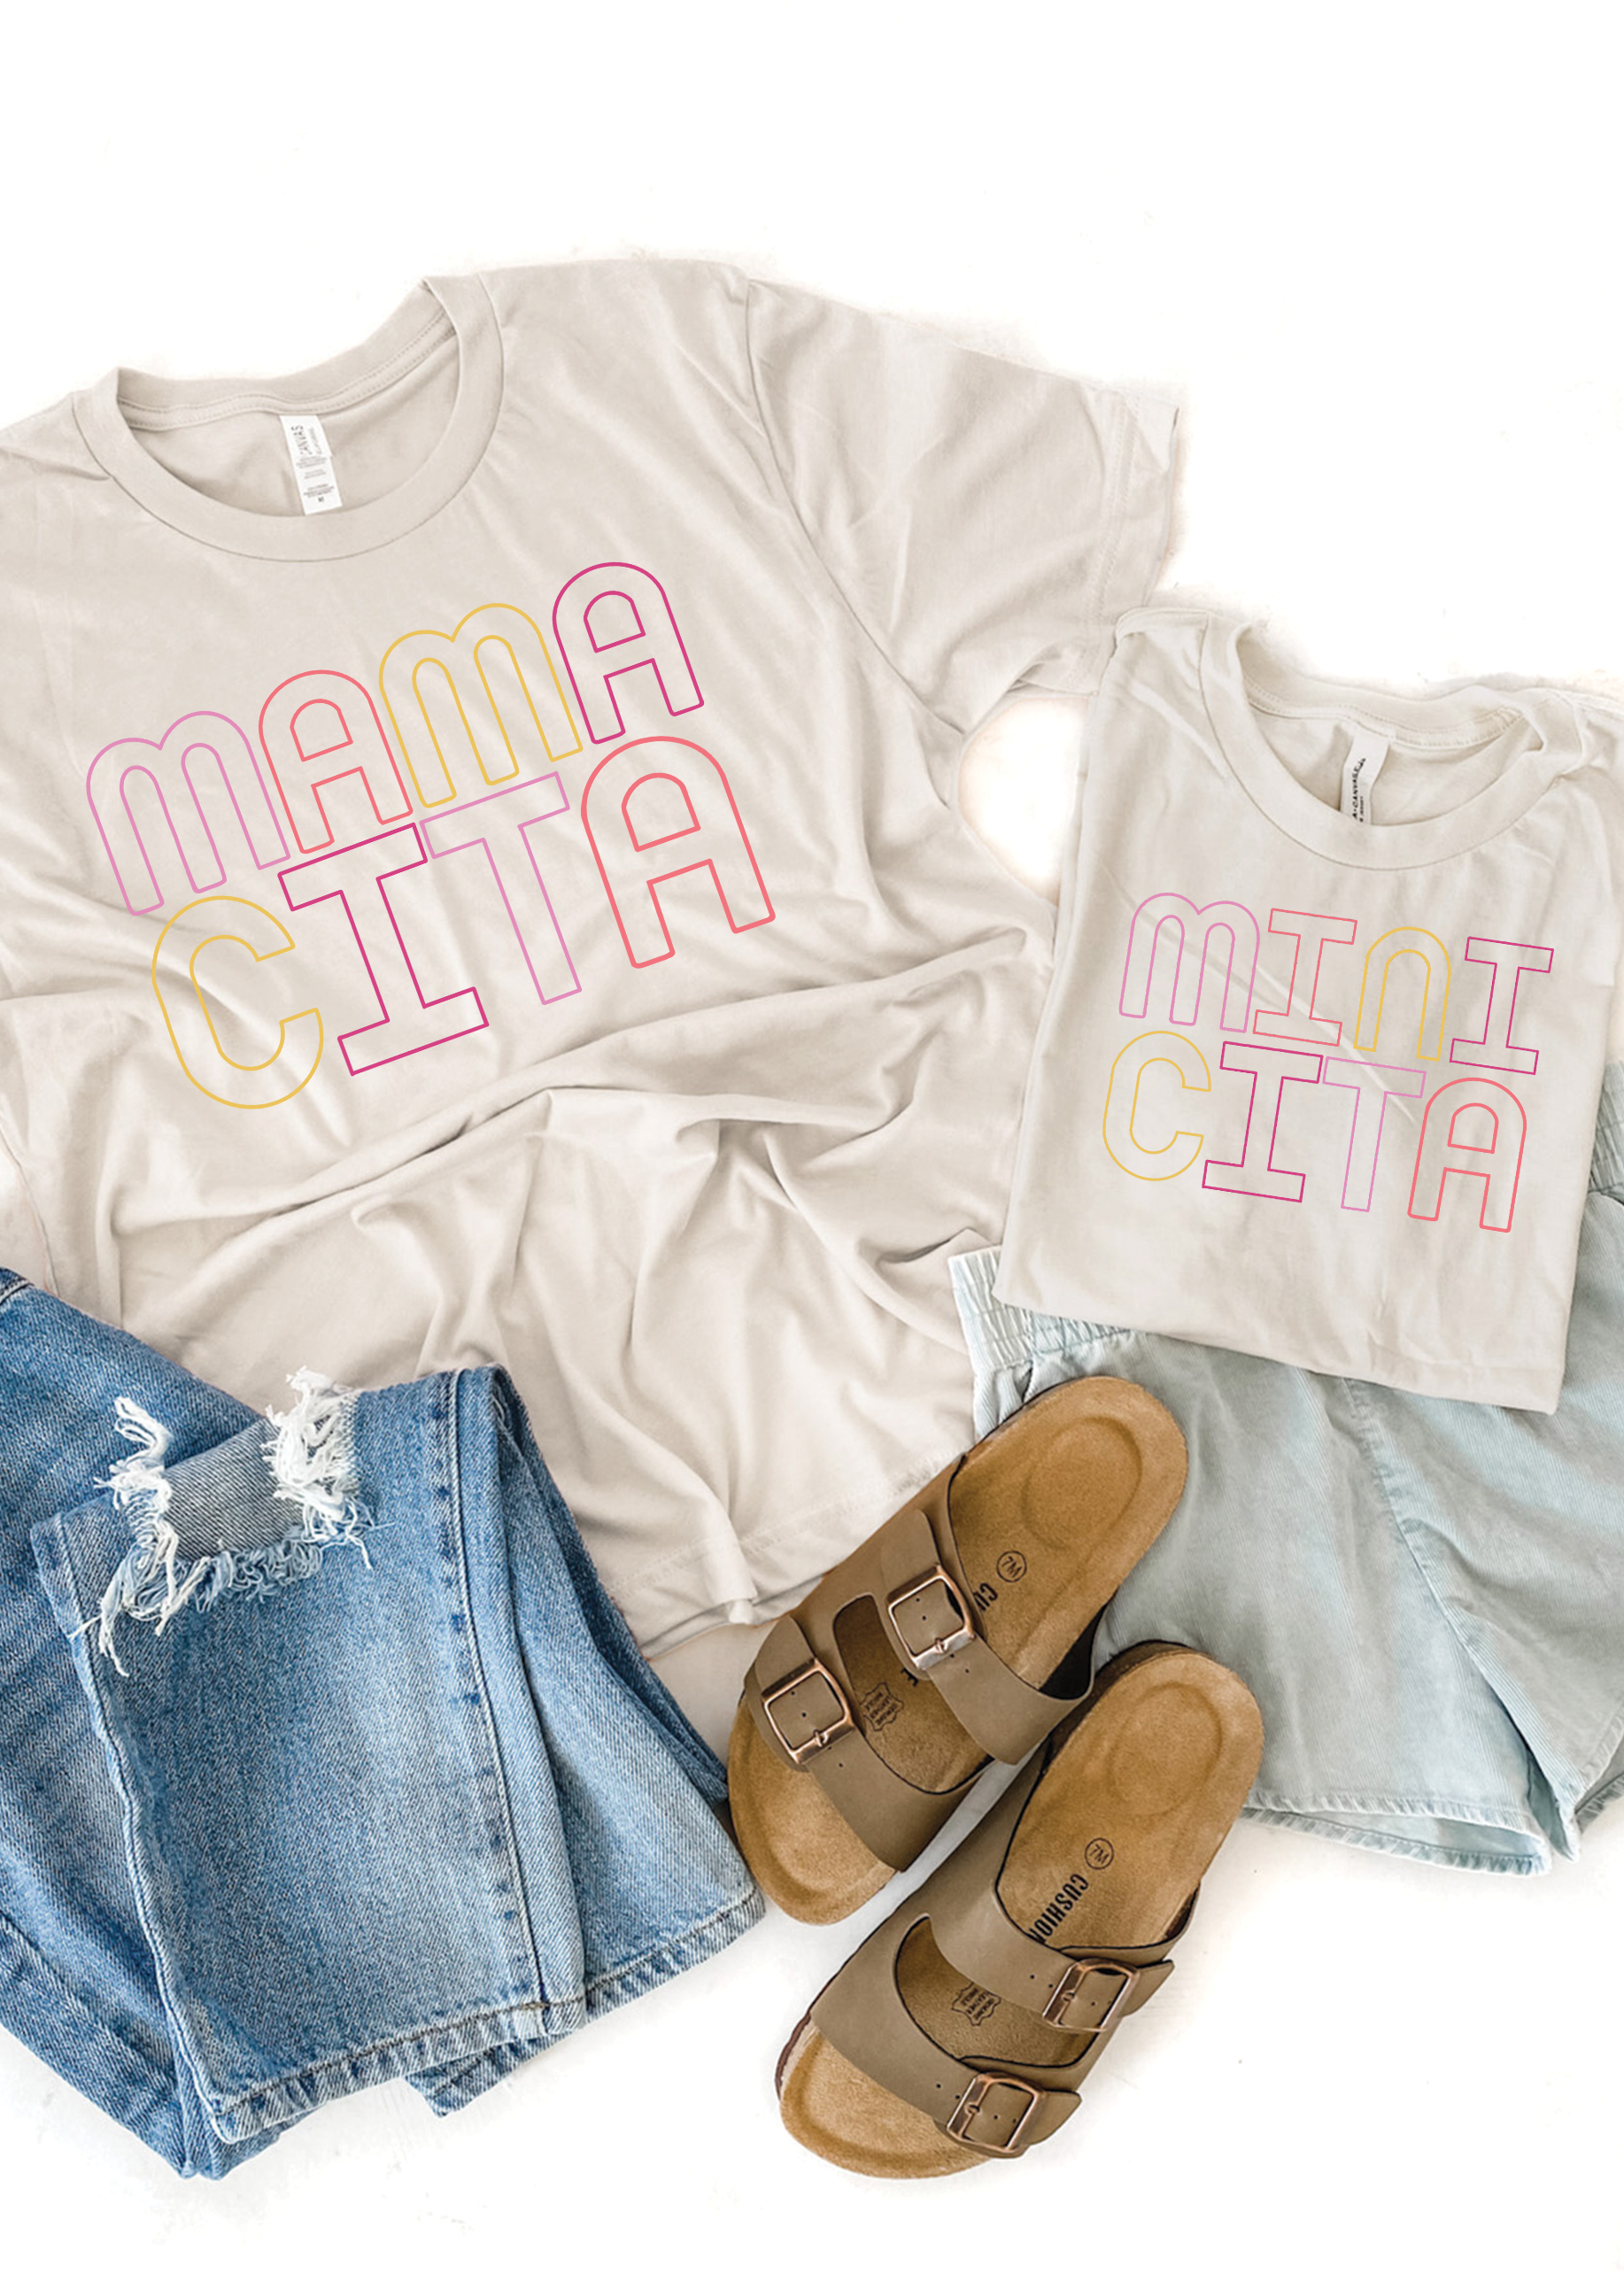 Minicita | Kids Tee | RTS-Sister Shirts-Sister Shirts, Cute & Custom Tees for Mama & Littles in Trussville, Alabama.